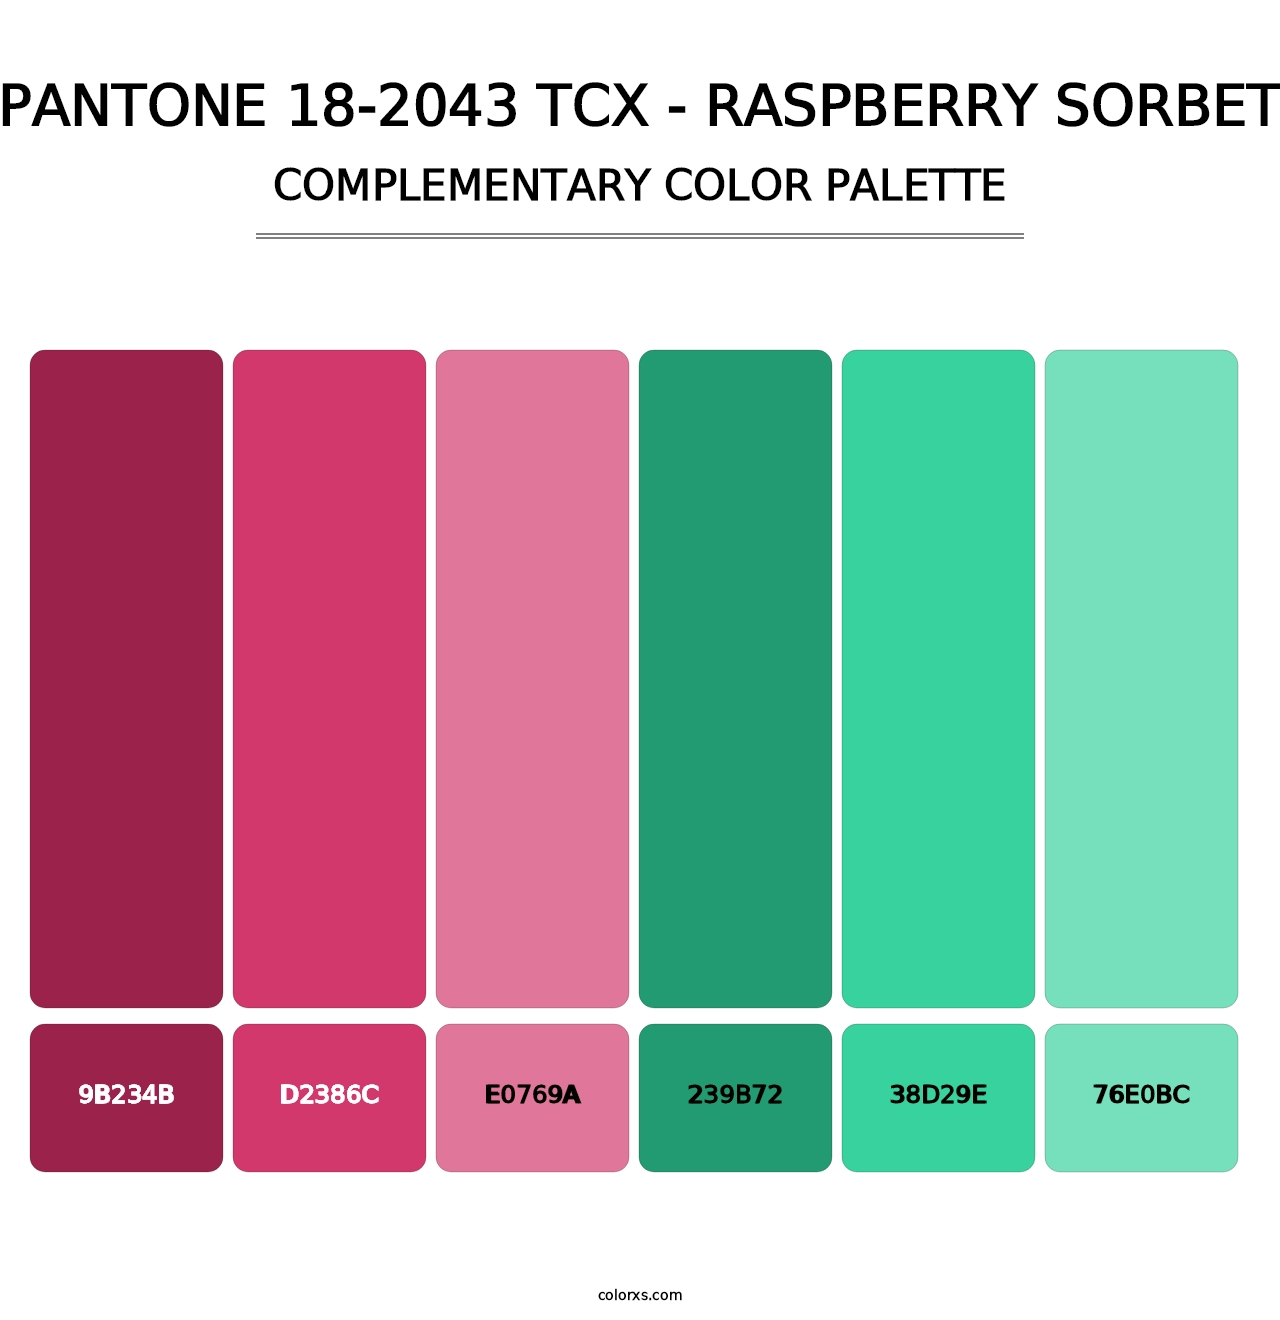 PANTONE 18-2043 TCX - Raspberry Sorbet - Complementary Color Palette